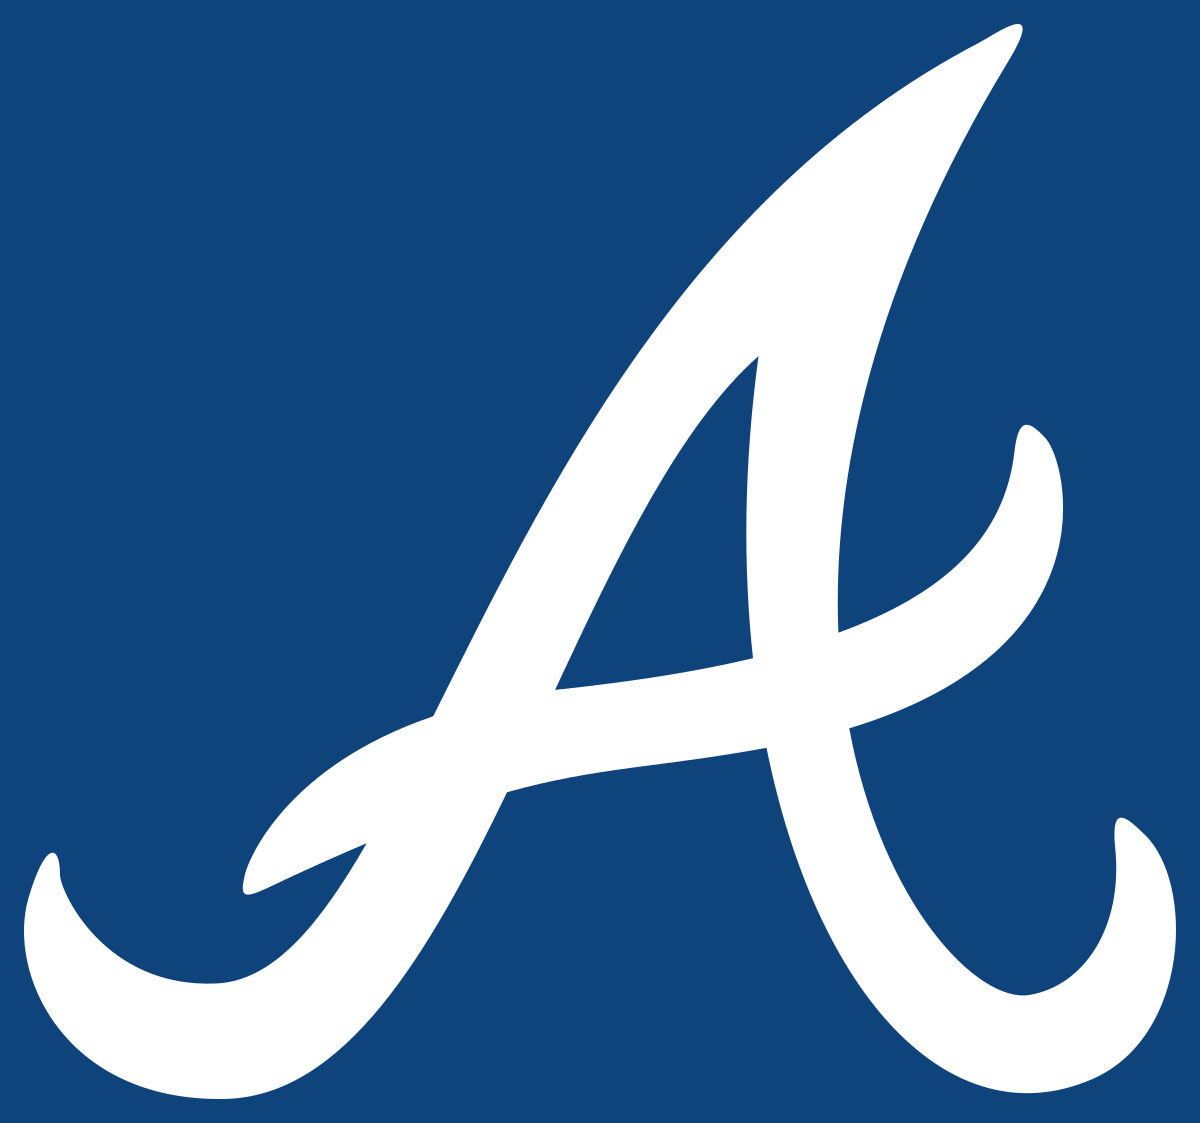  Defend the NL East (Atlanta Braves)